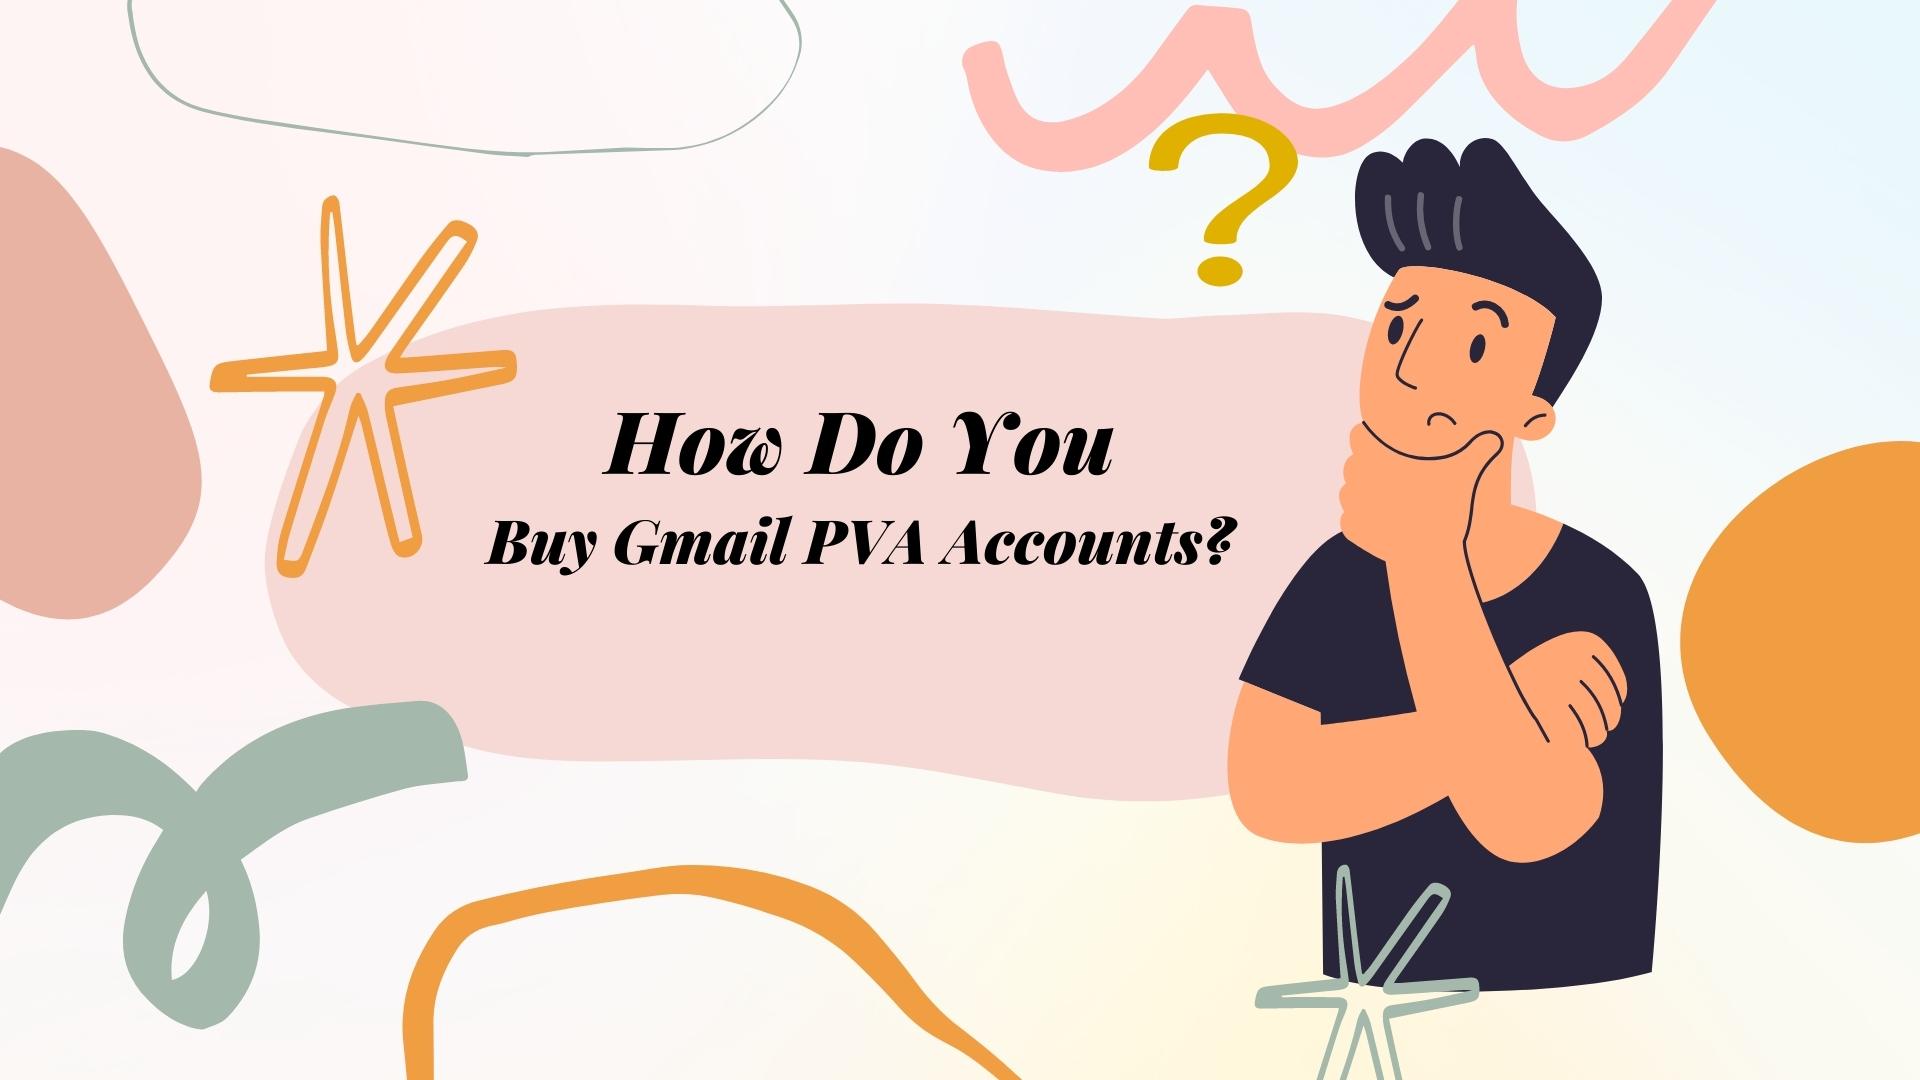 How Do You Buy Gmail PVA Accounts?